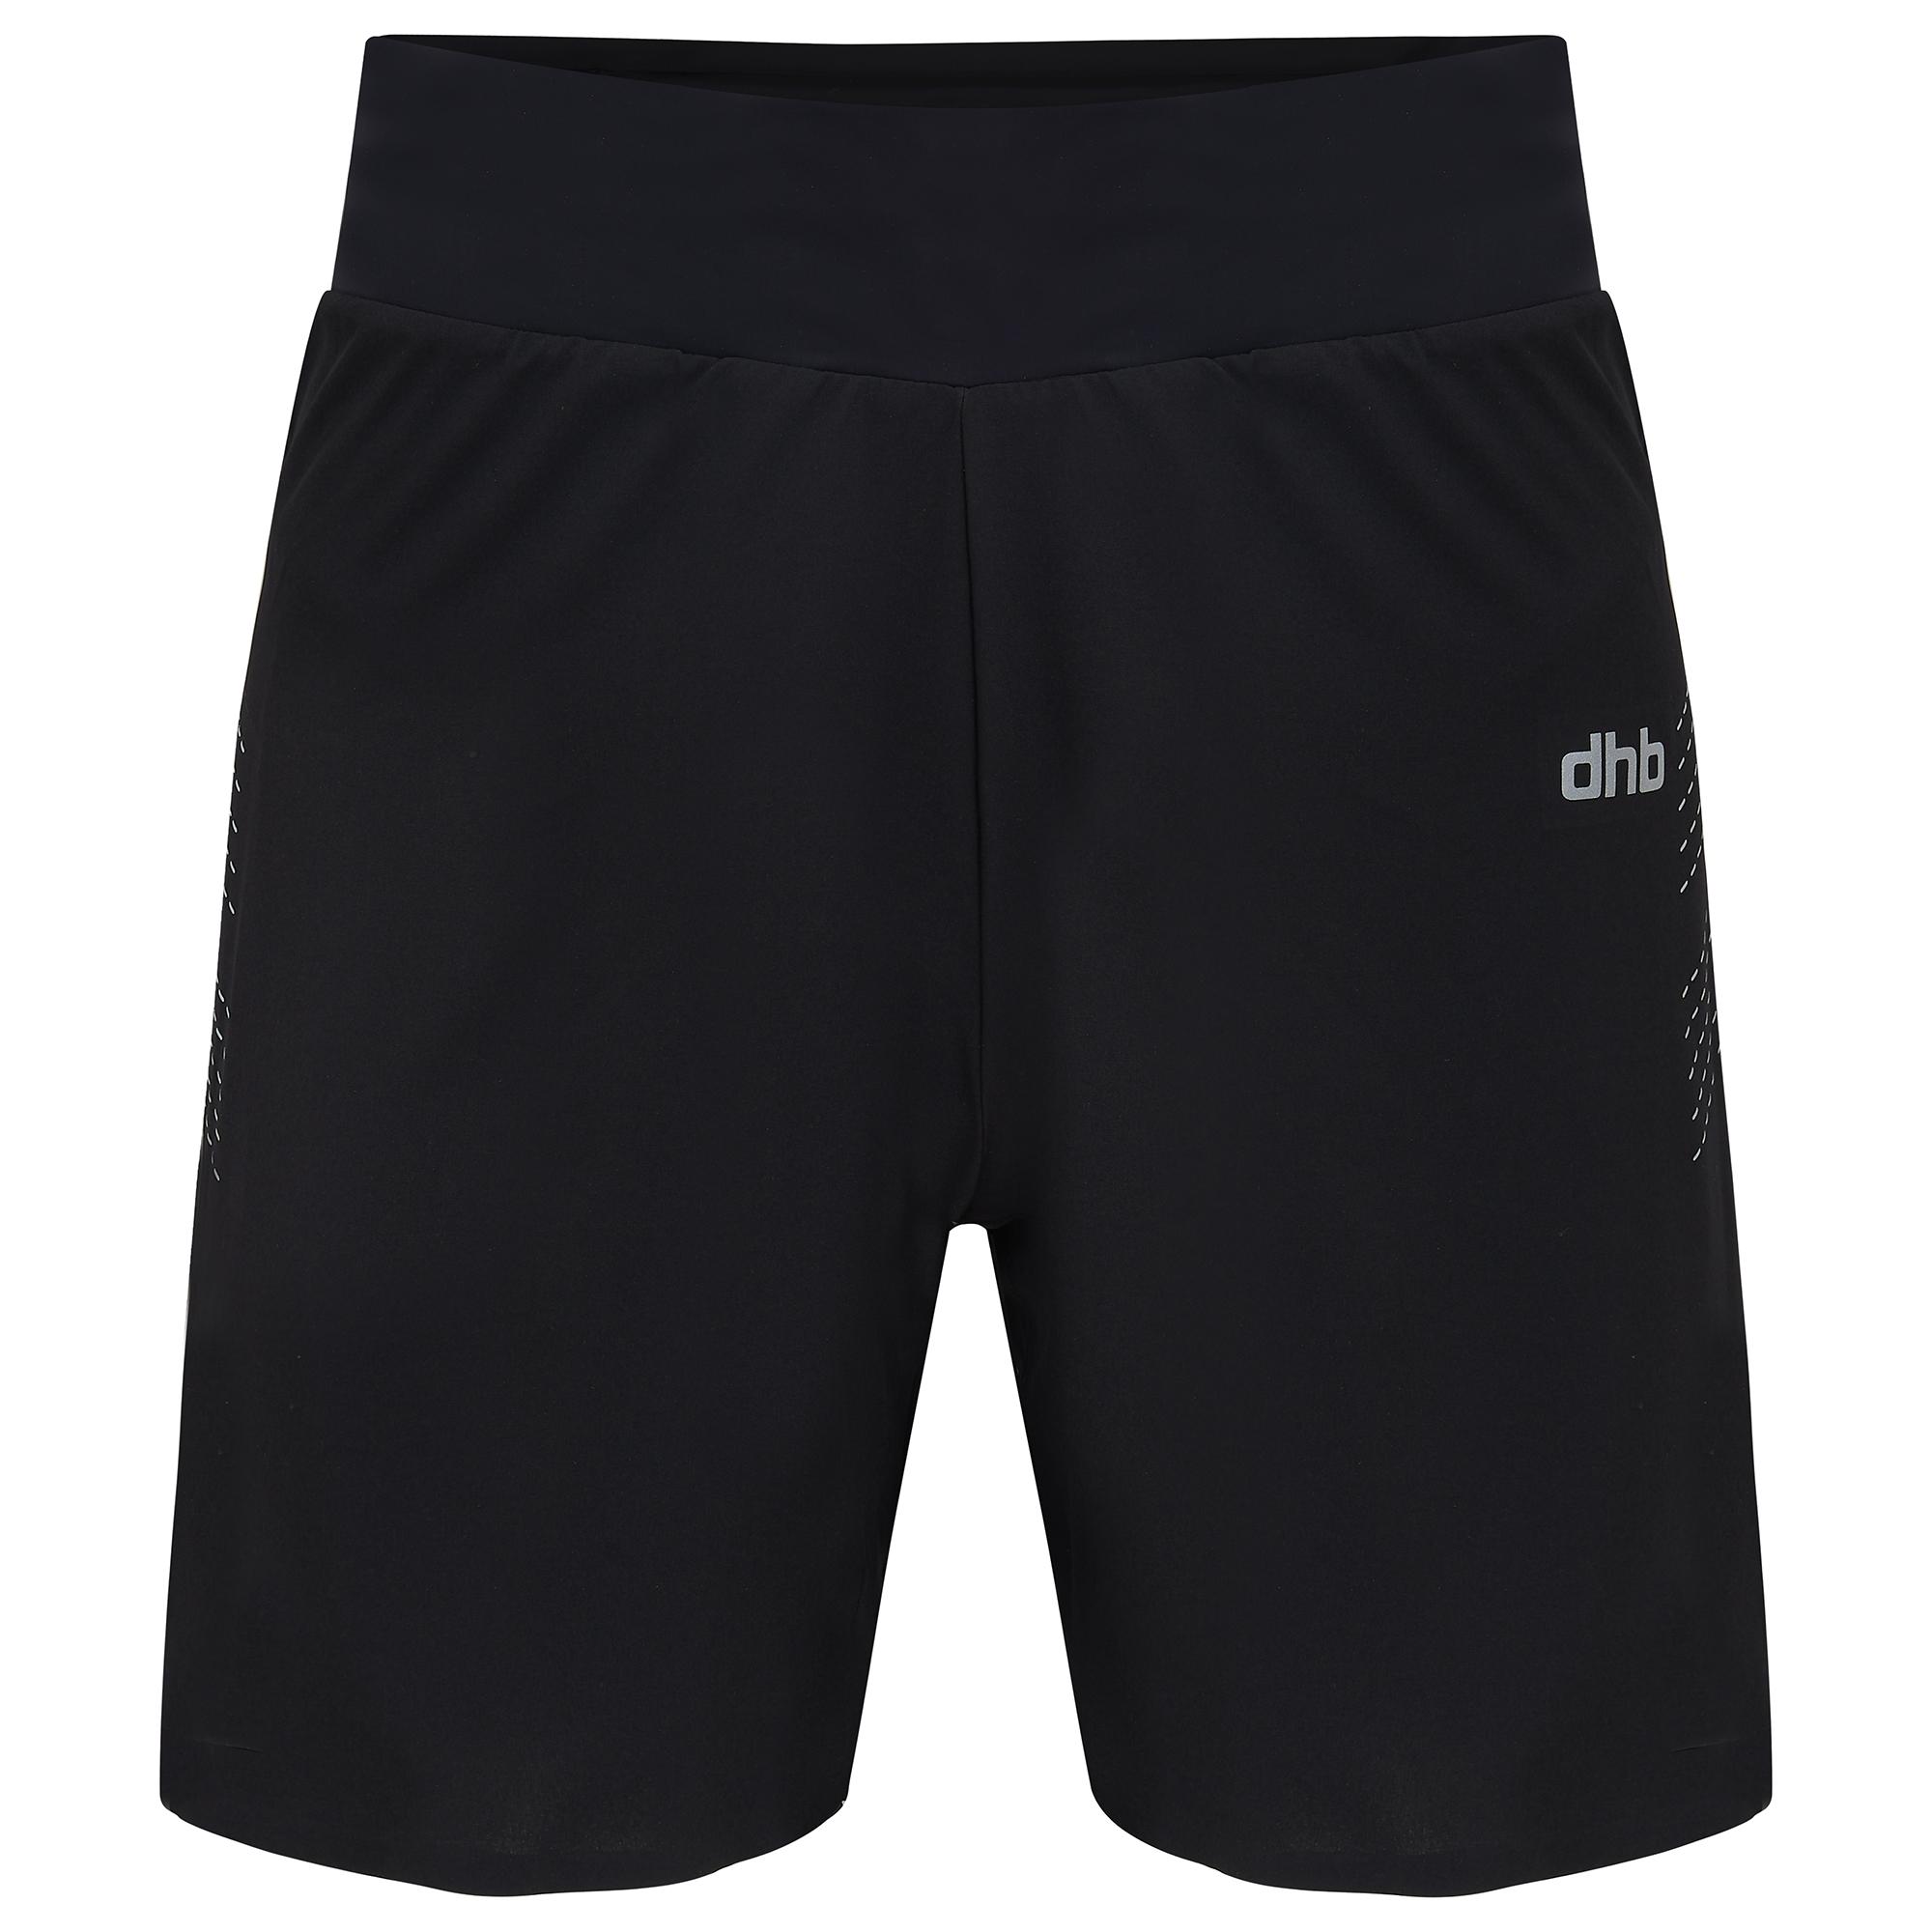 Dhb Aeron Flt Run Shorts - Black